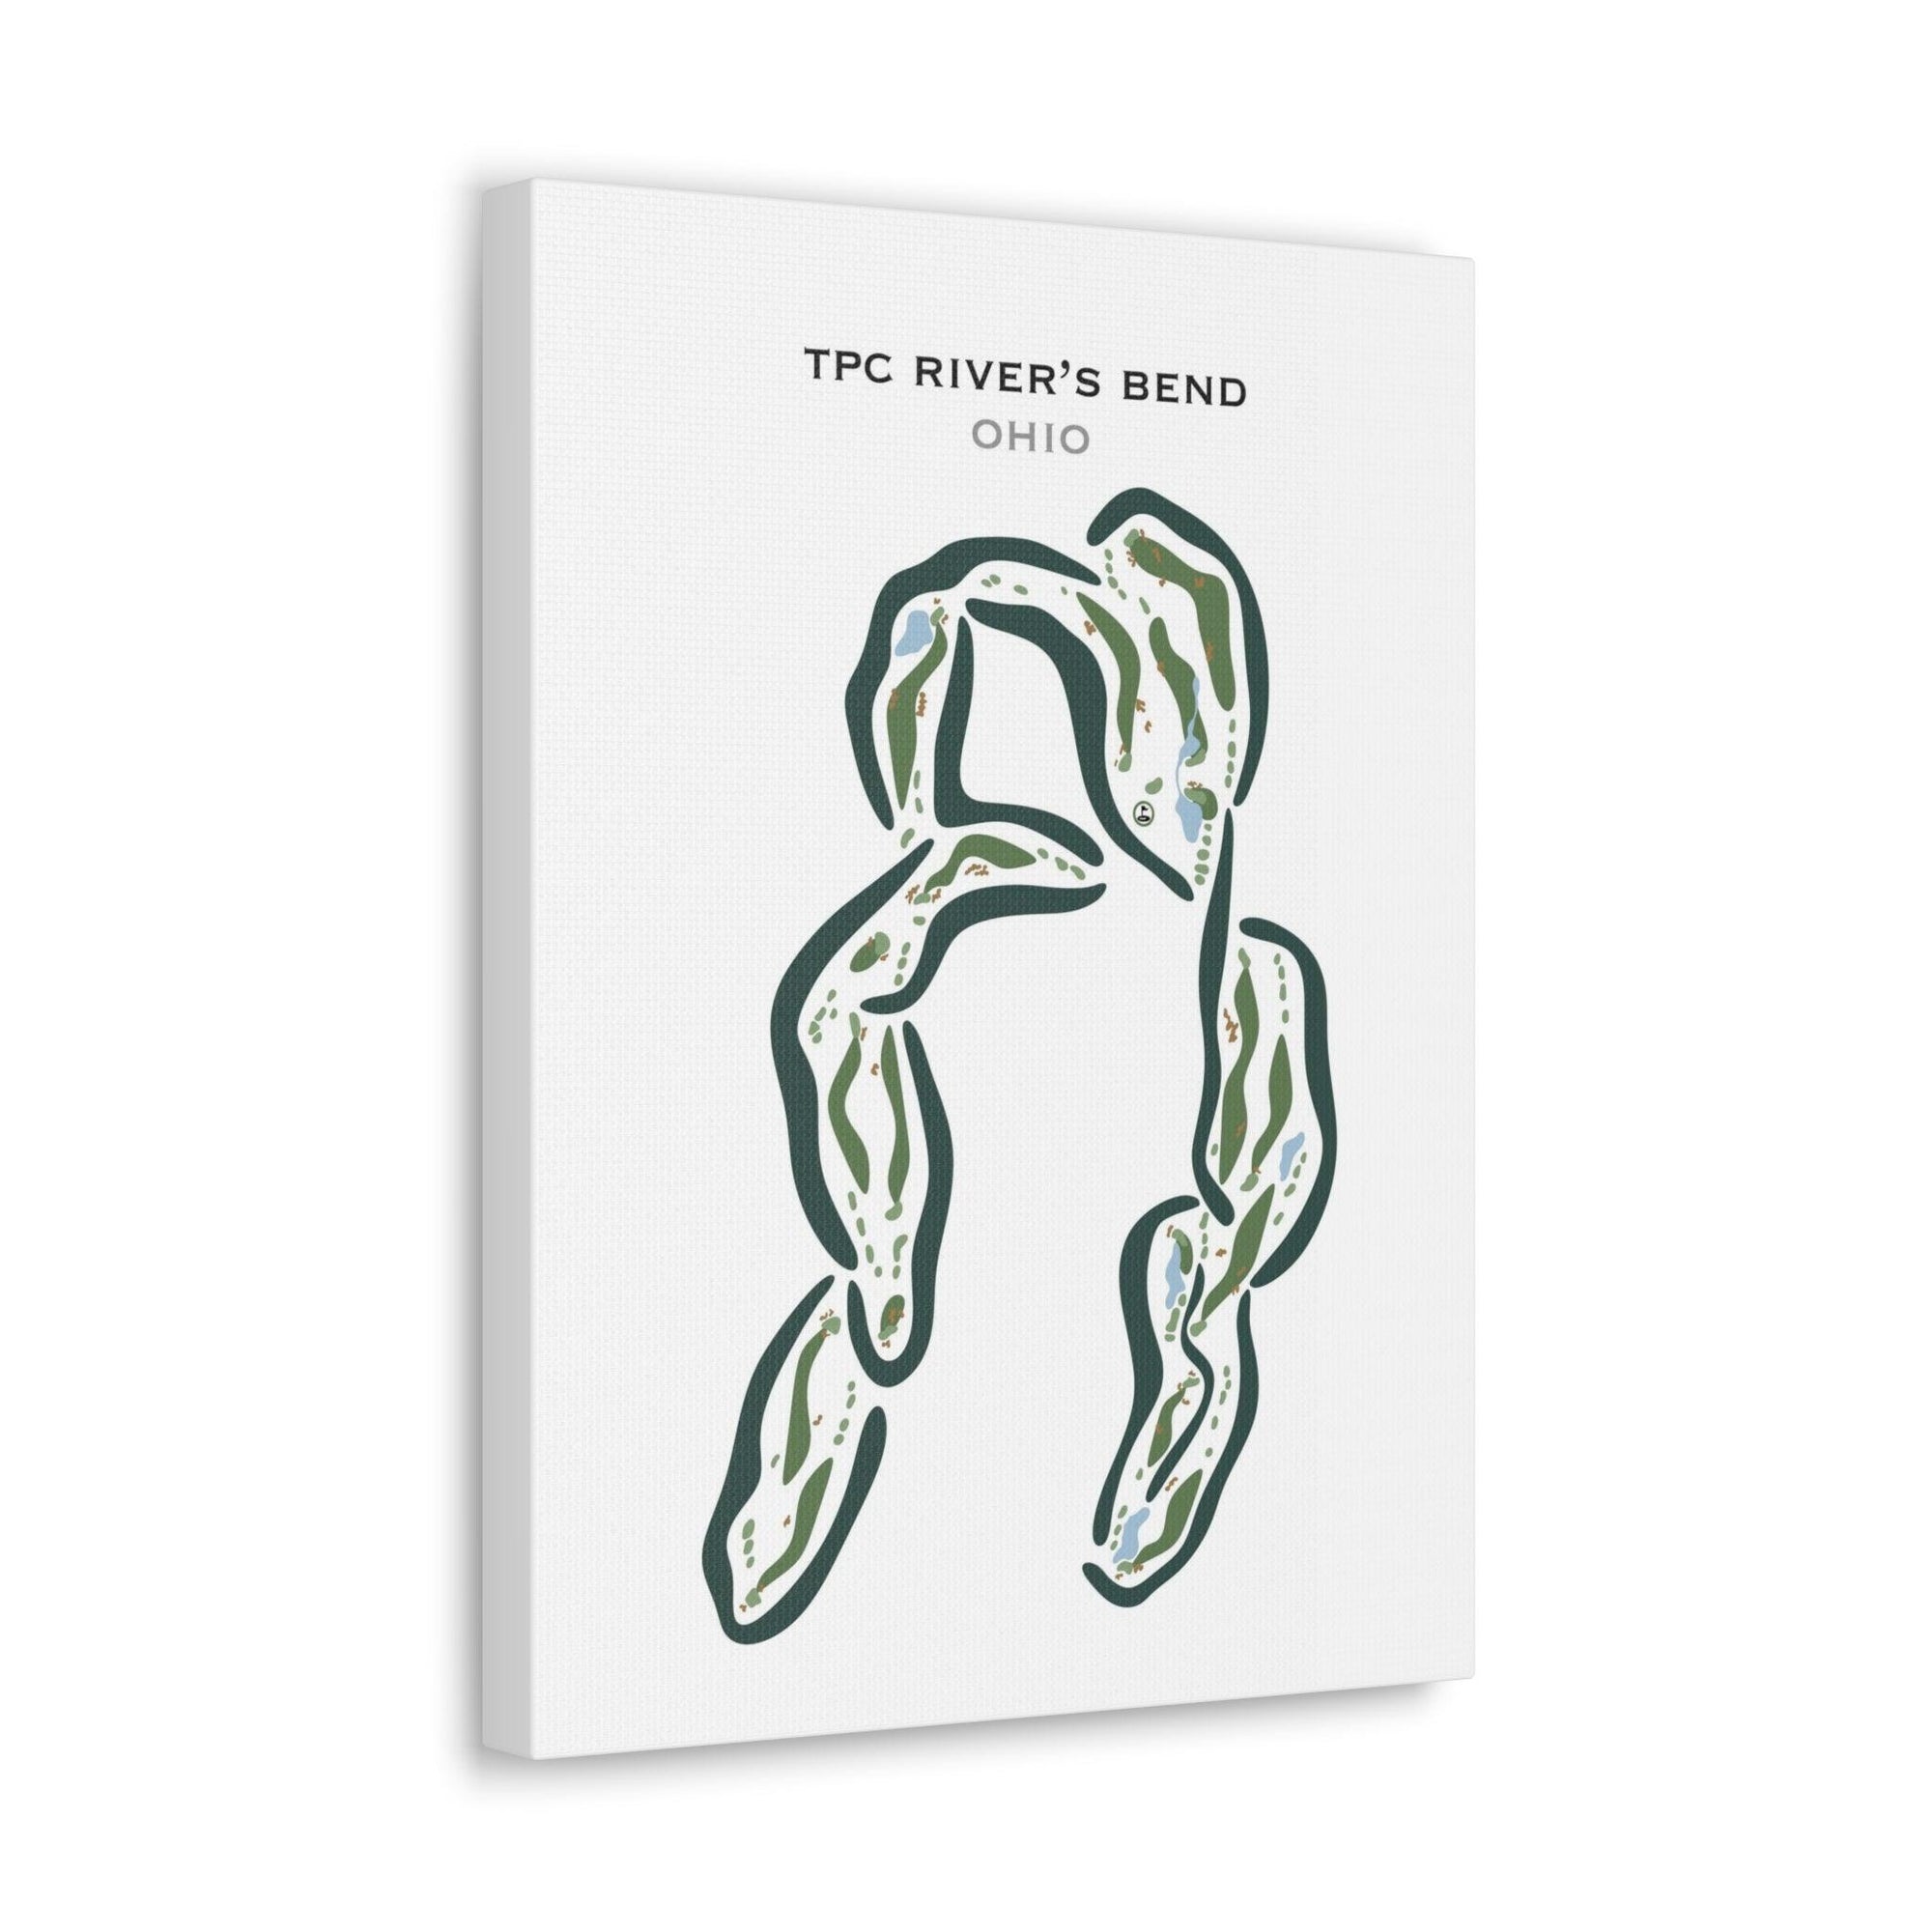 TPC River's Bend, Ohio - Printed Golf Courses